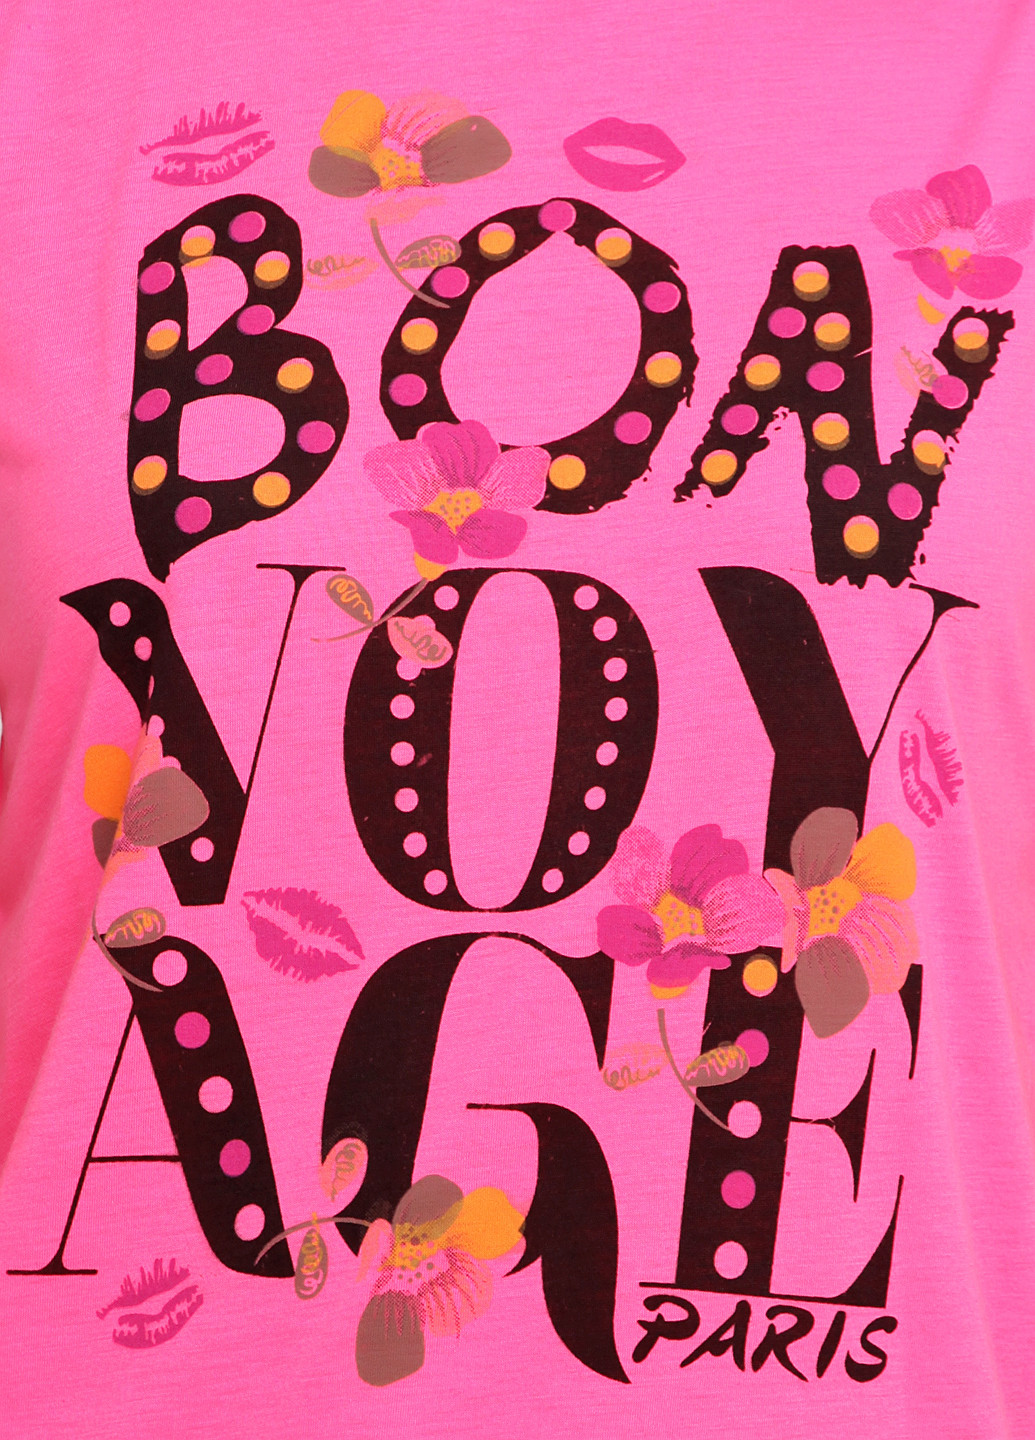 Кислотно-рожева літня футболка SEZ 10